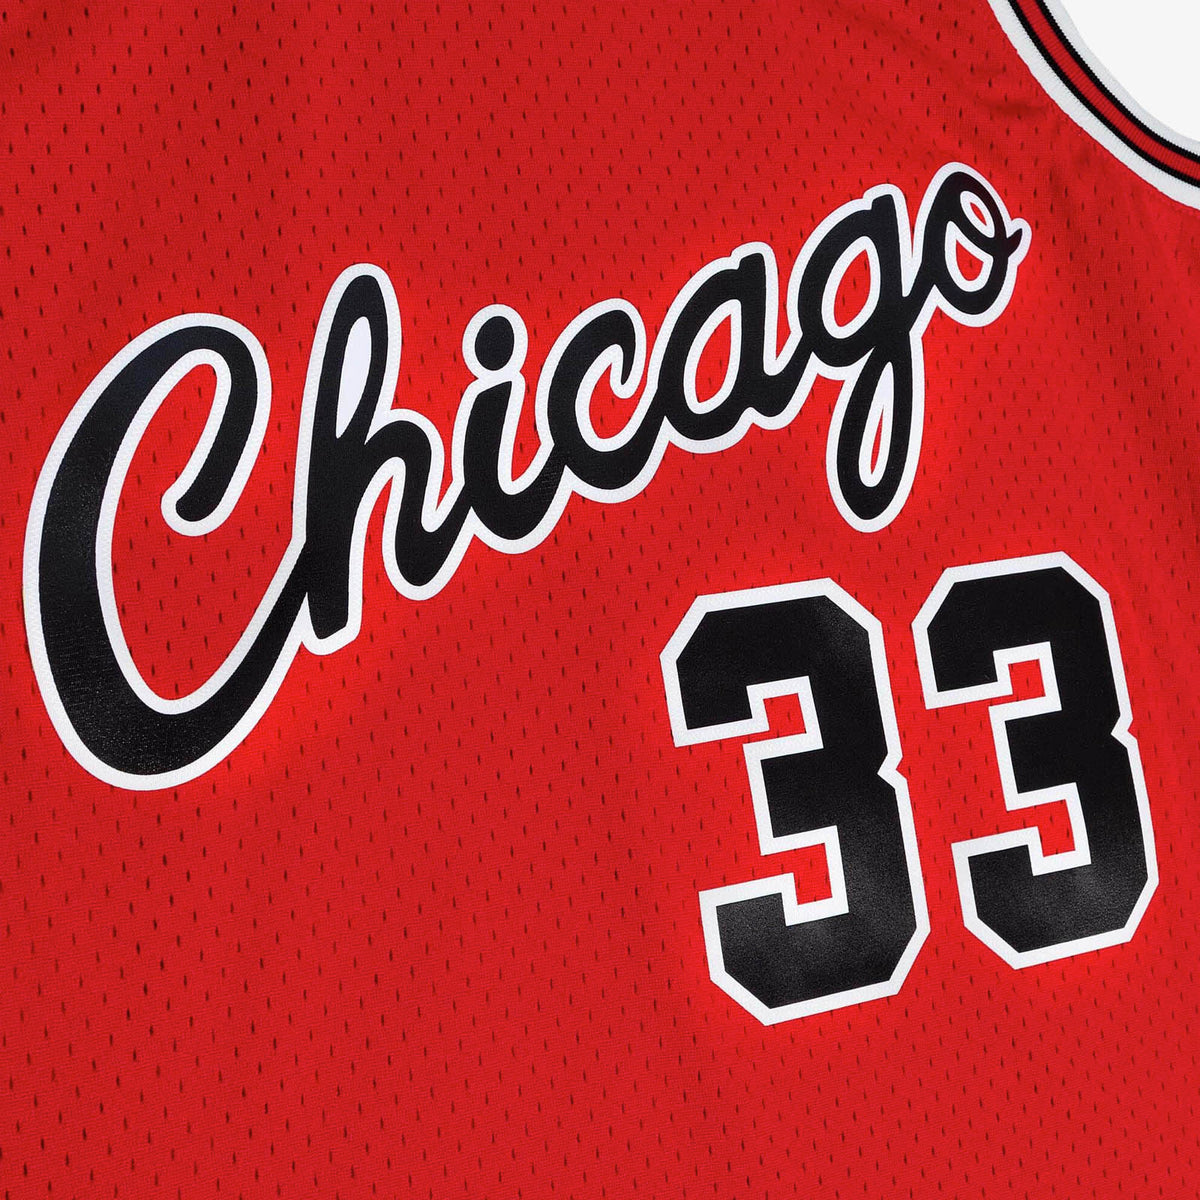 Scottie Pippen Chicago Bulls NBA Jerseys for sale